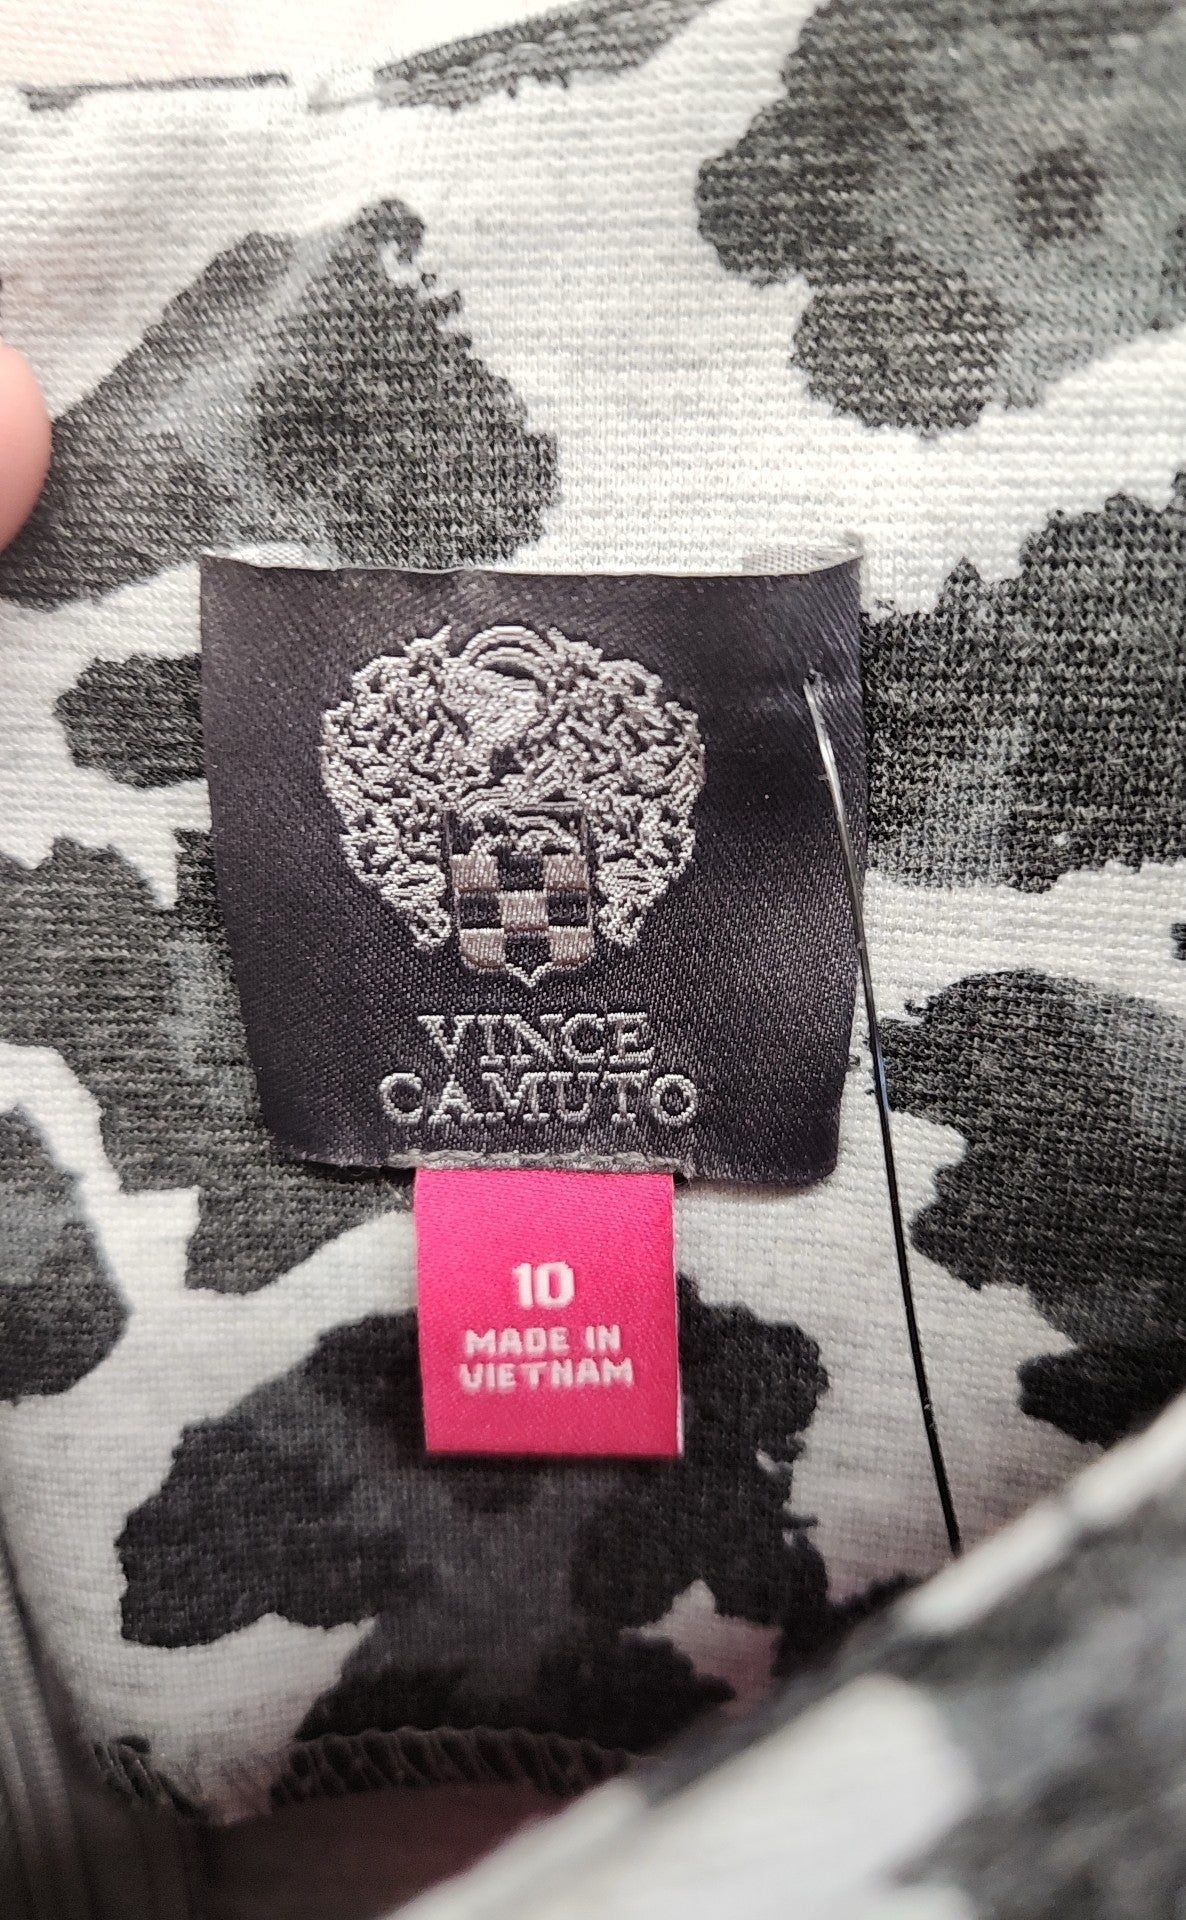 Vince Camuto Women's Size 10 Gray Animal Print Dress